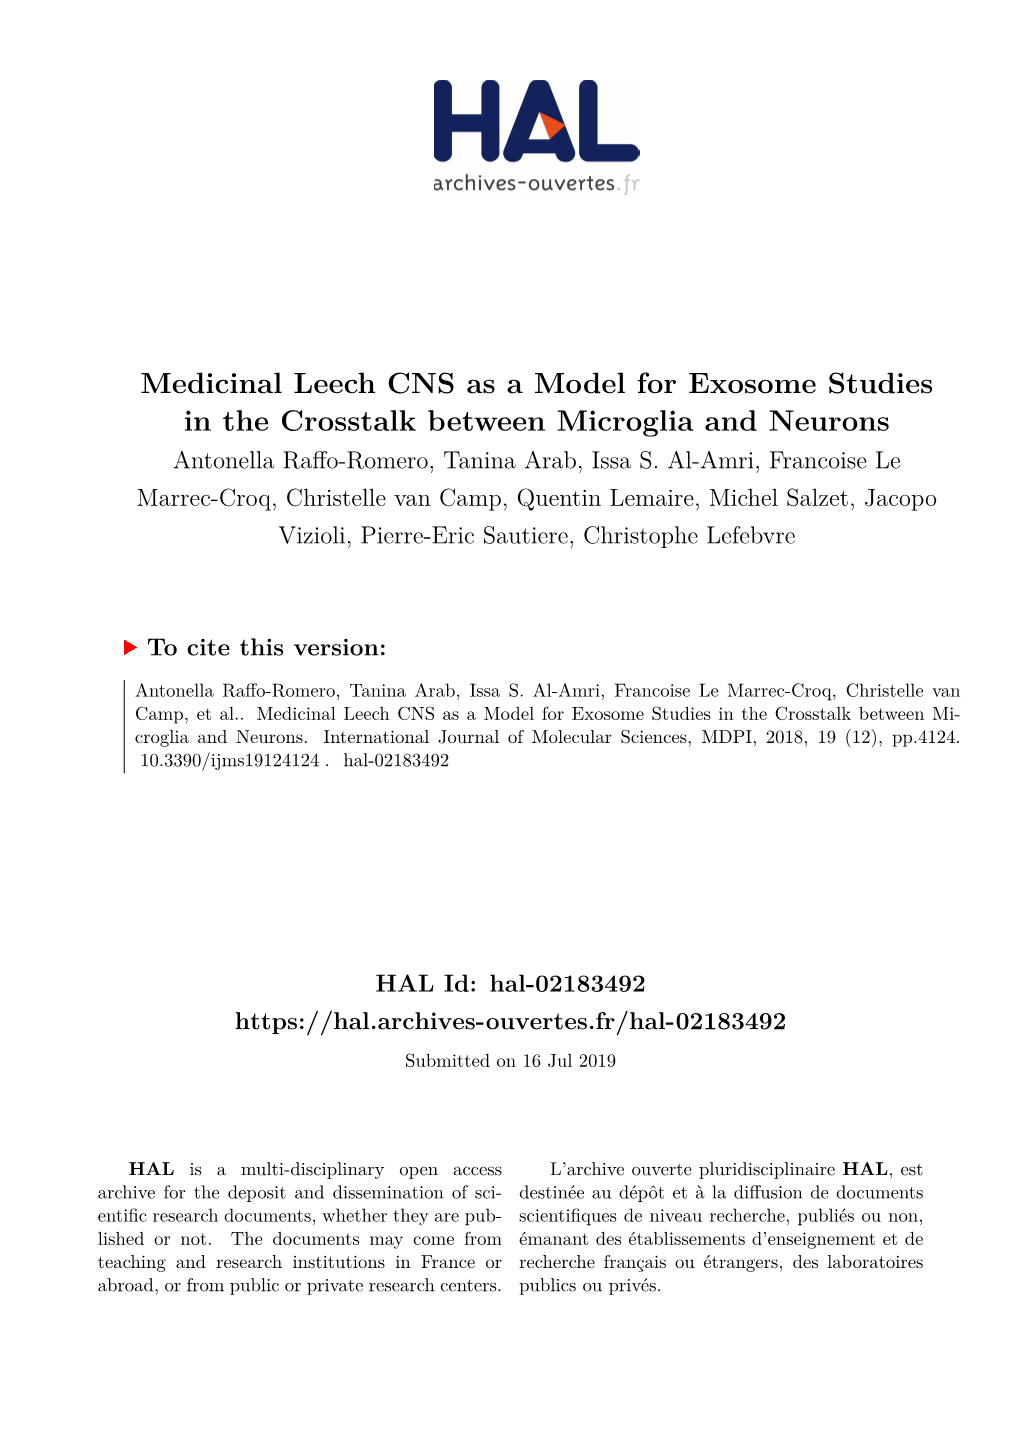 Medicinal Leech CNS As a Model for Exosome Studies in the Crosstalk Between Microglia and Neurons Antonella Raffo-Romero, Tanina Arab, Issa S